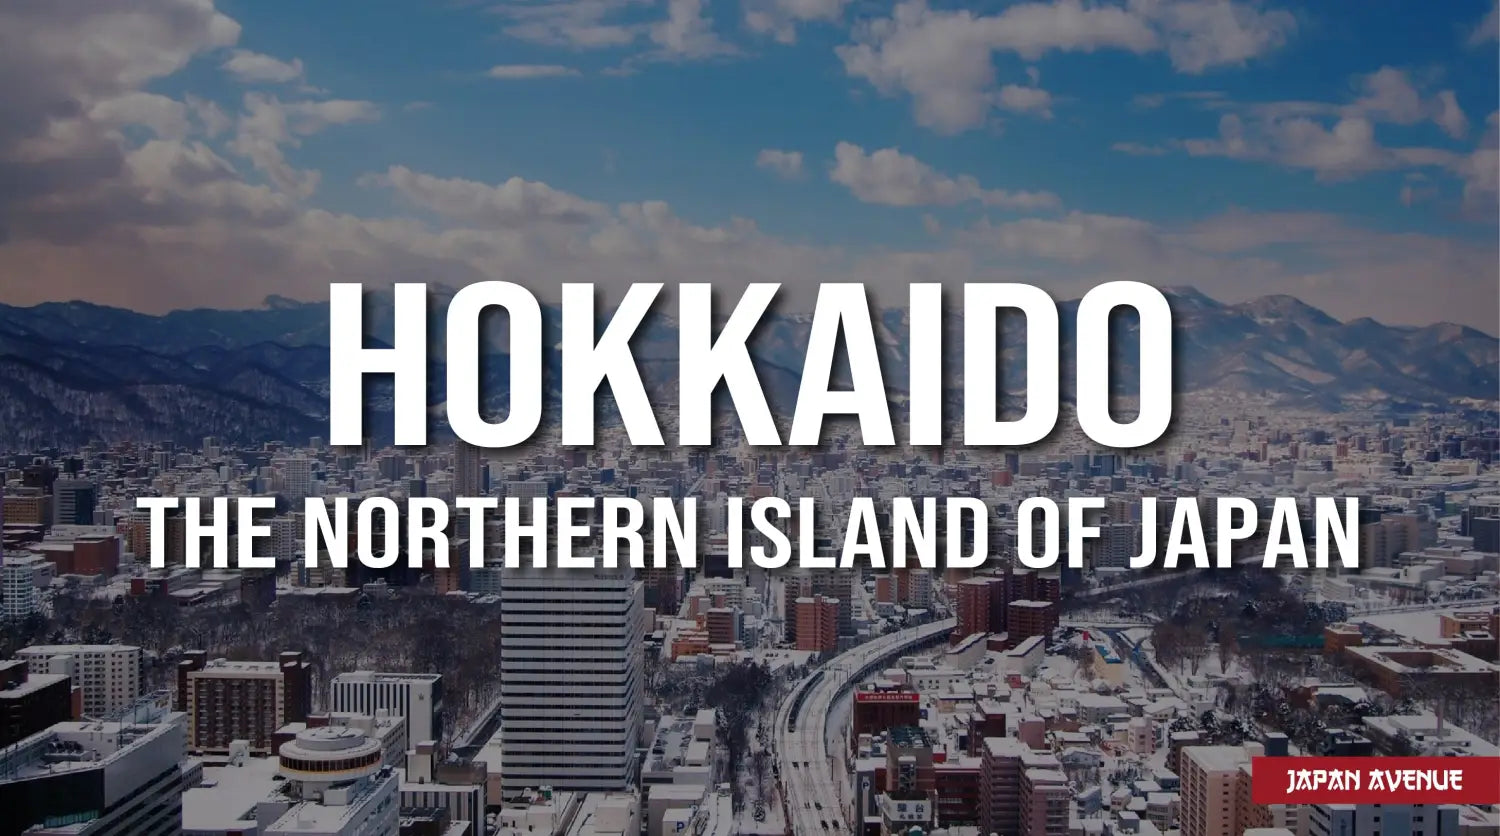 Hokkaido, the Northern Island of Japan